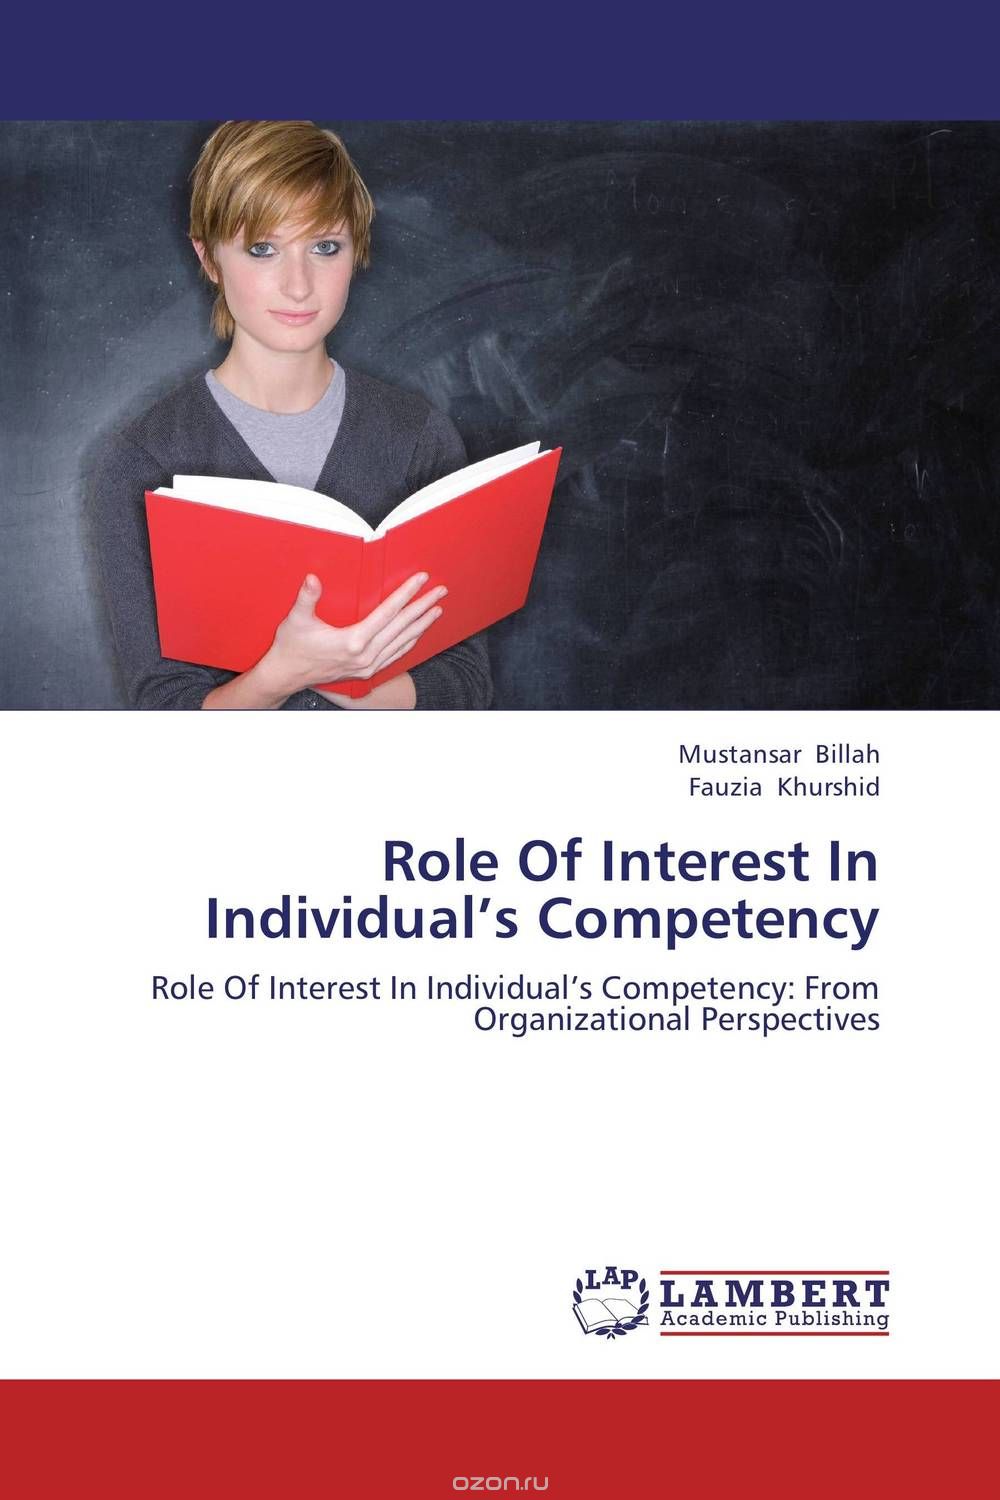 Скачать книгу "Role Of Interest In Individual’s Competency"